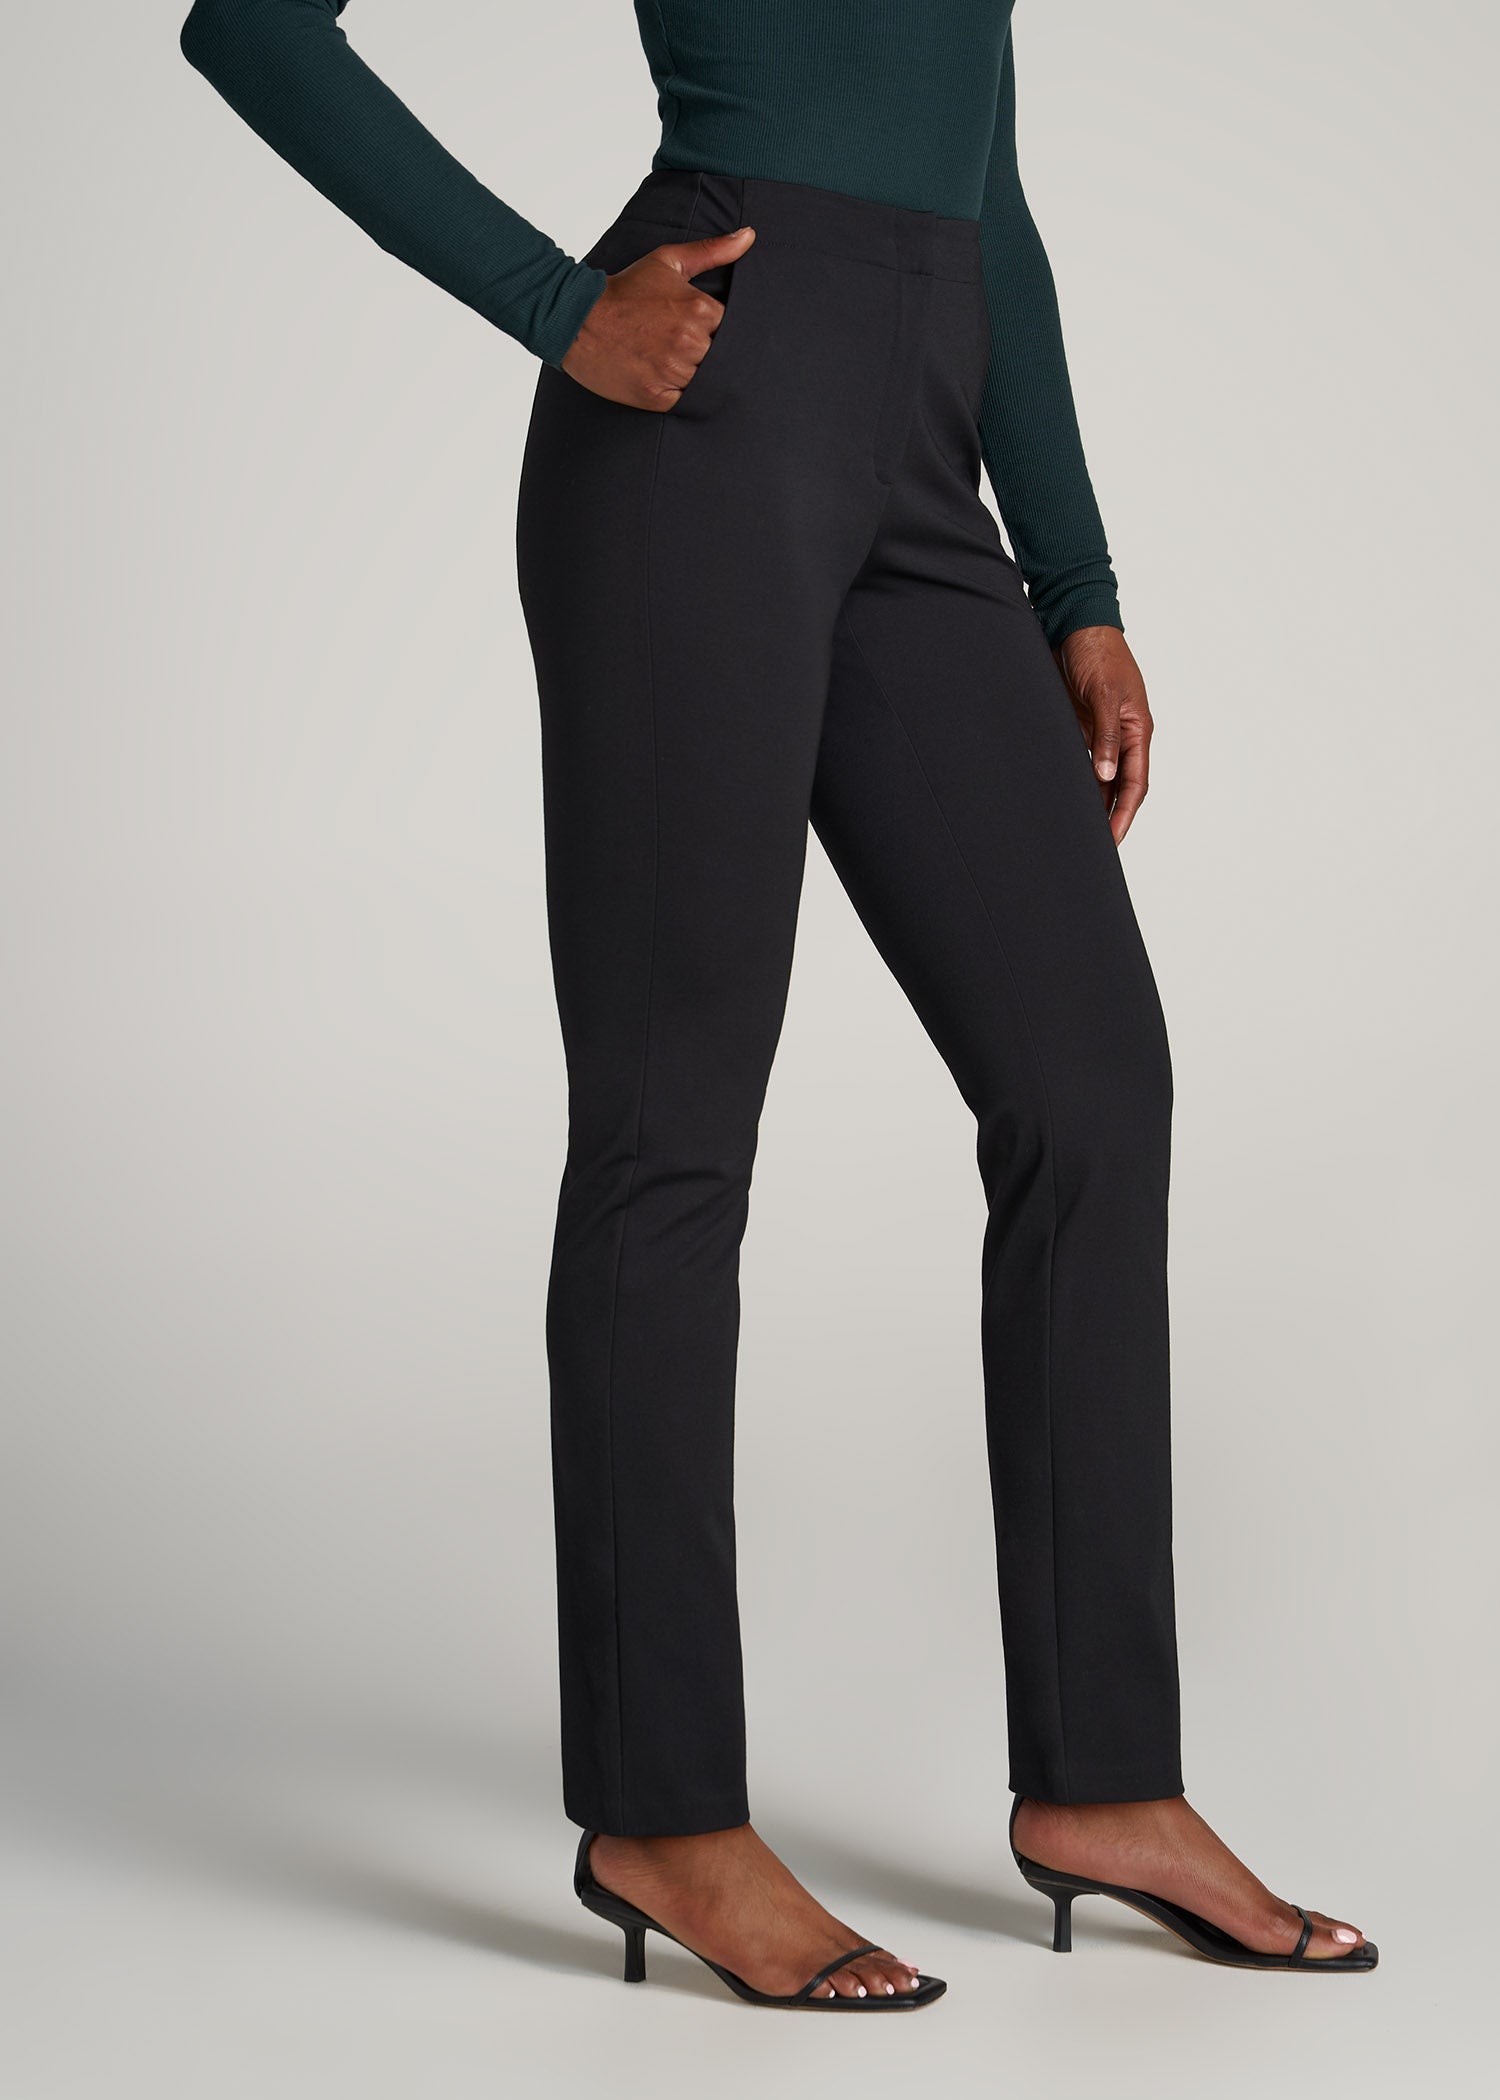 Slim-Fit Dress Pants for Tall Women | American Tall